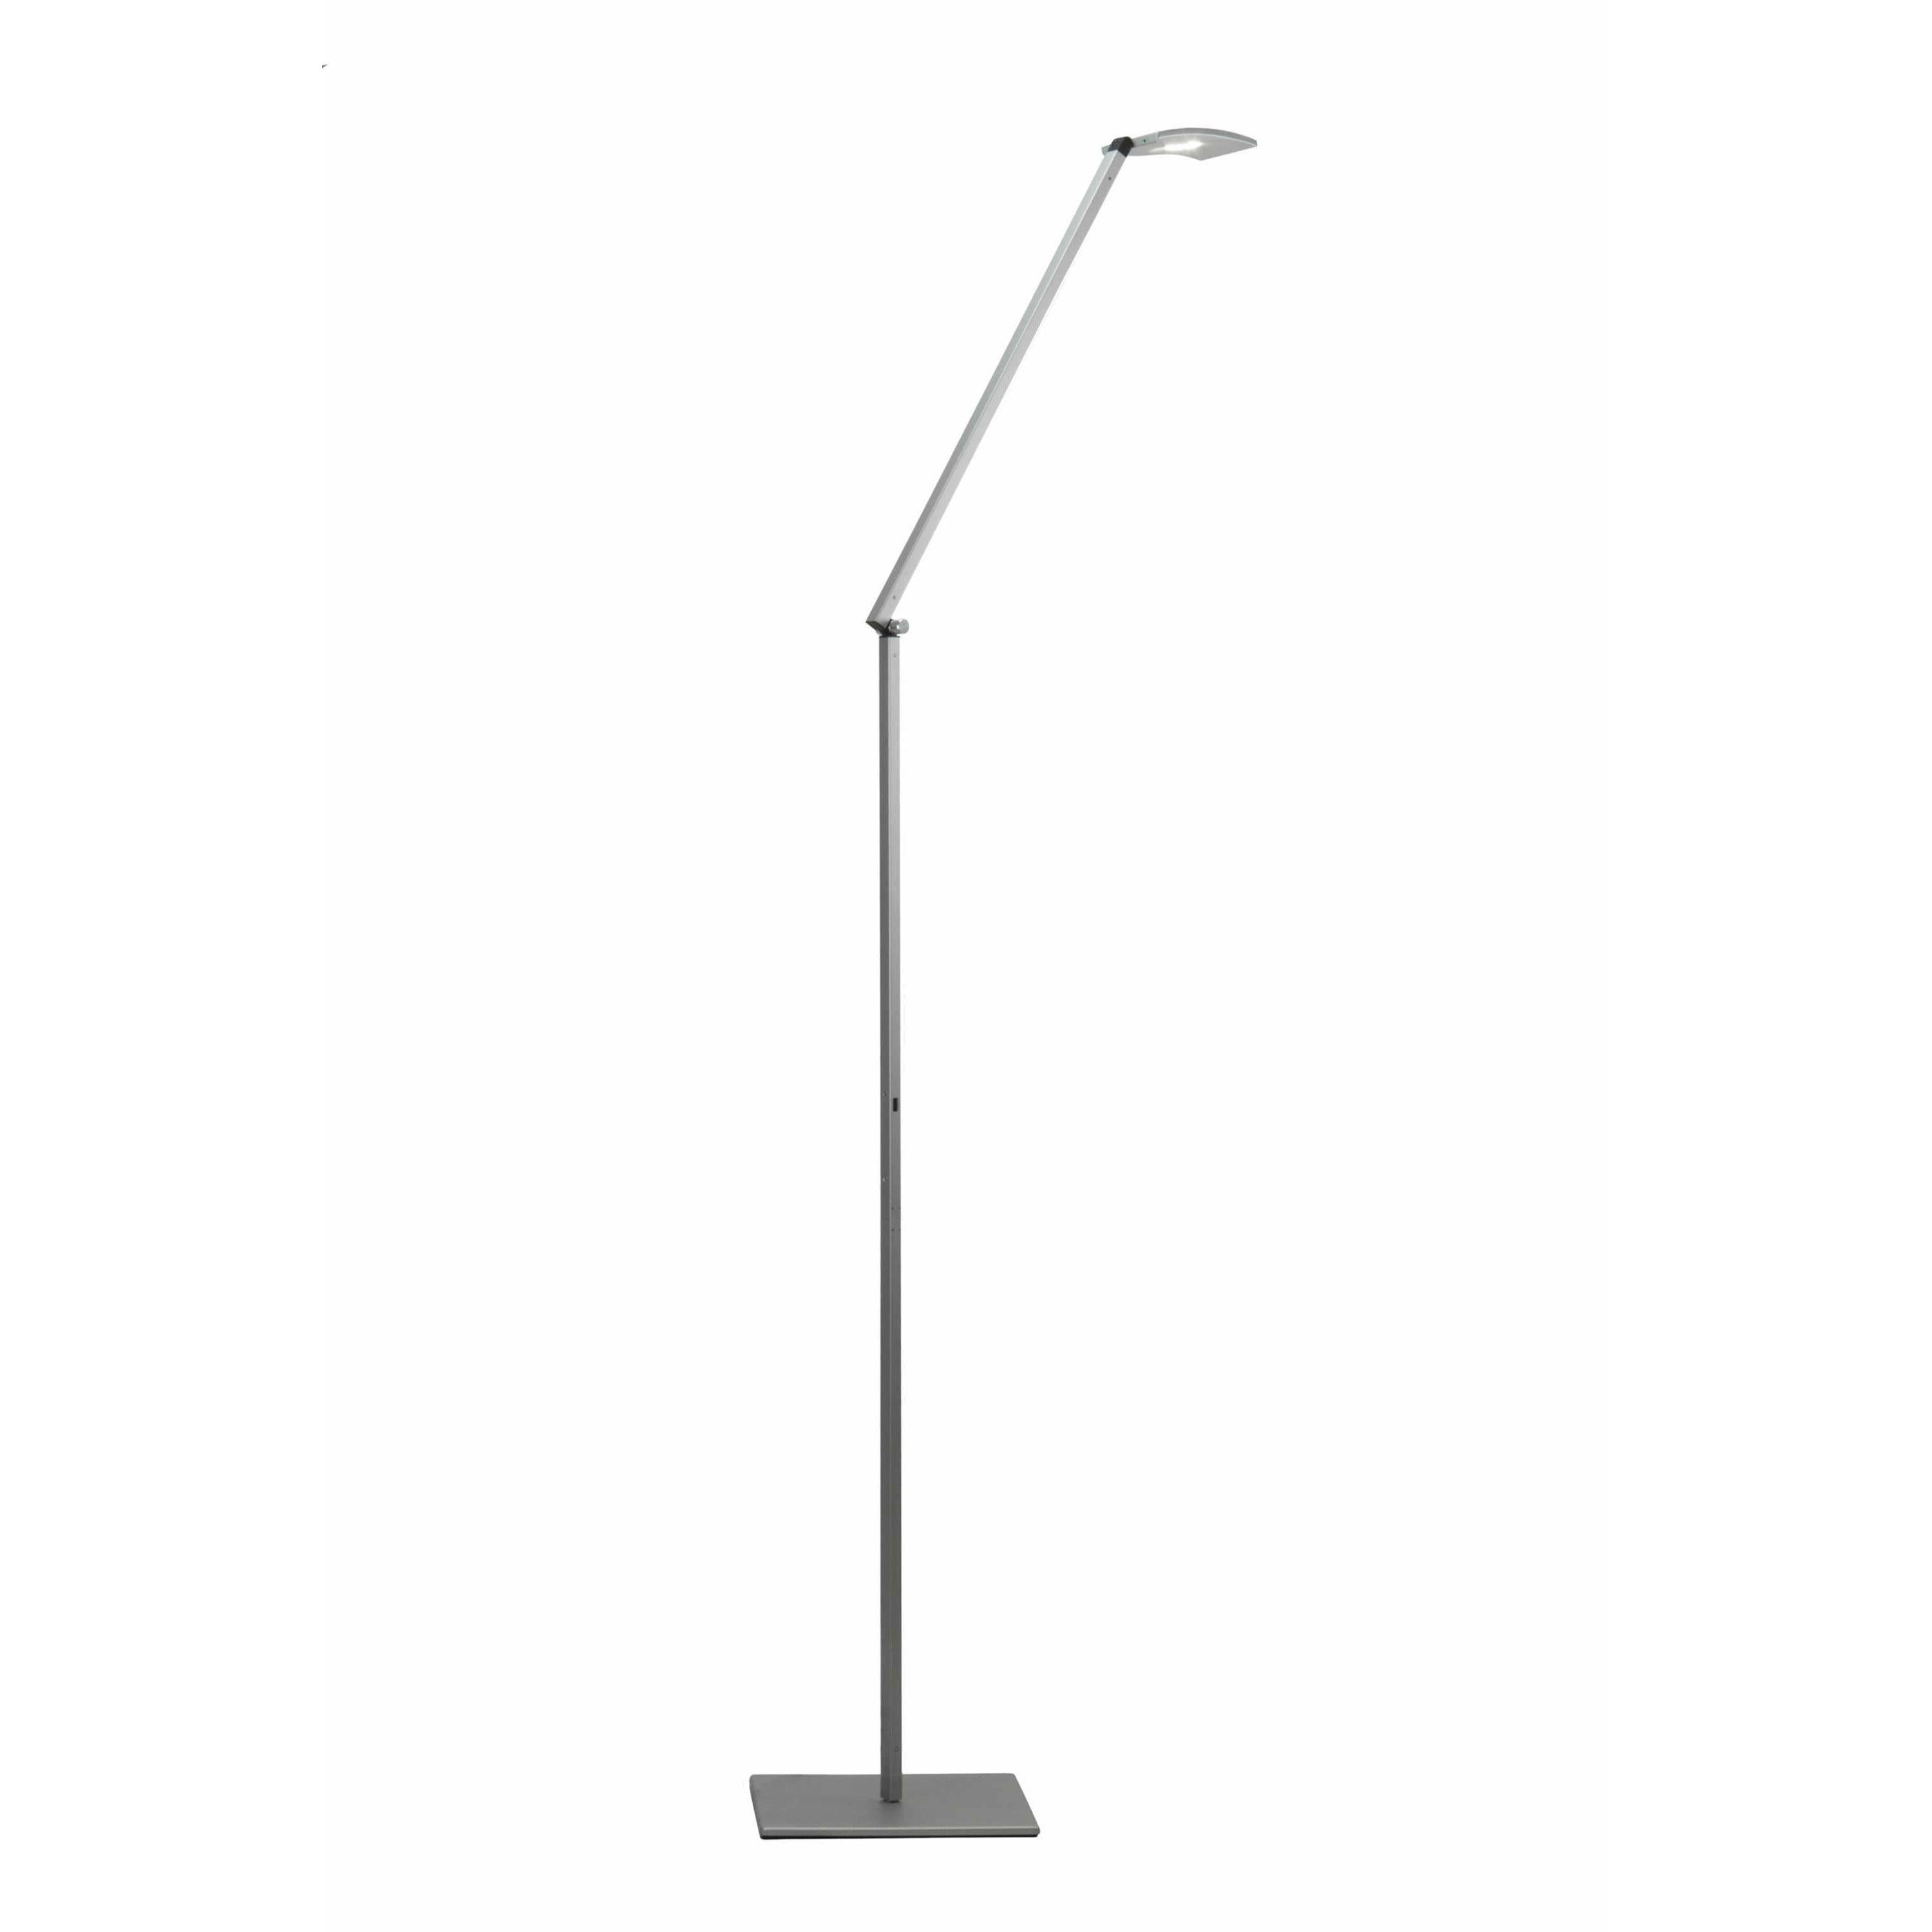 Koncept Lady Floor Lamp with USB Charging Port in Metallic Black, L7-MBK-FLR - 3